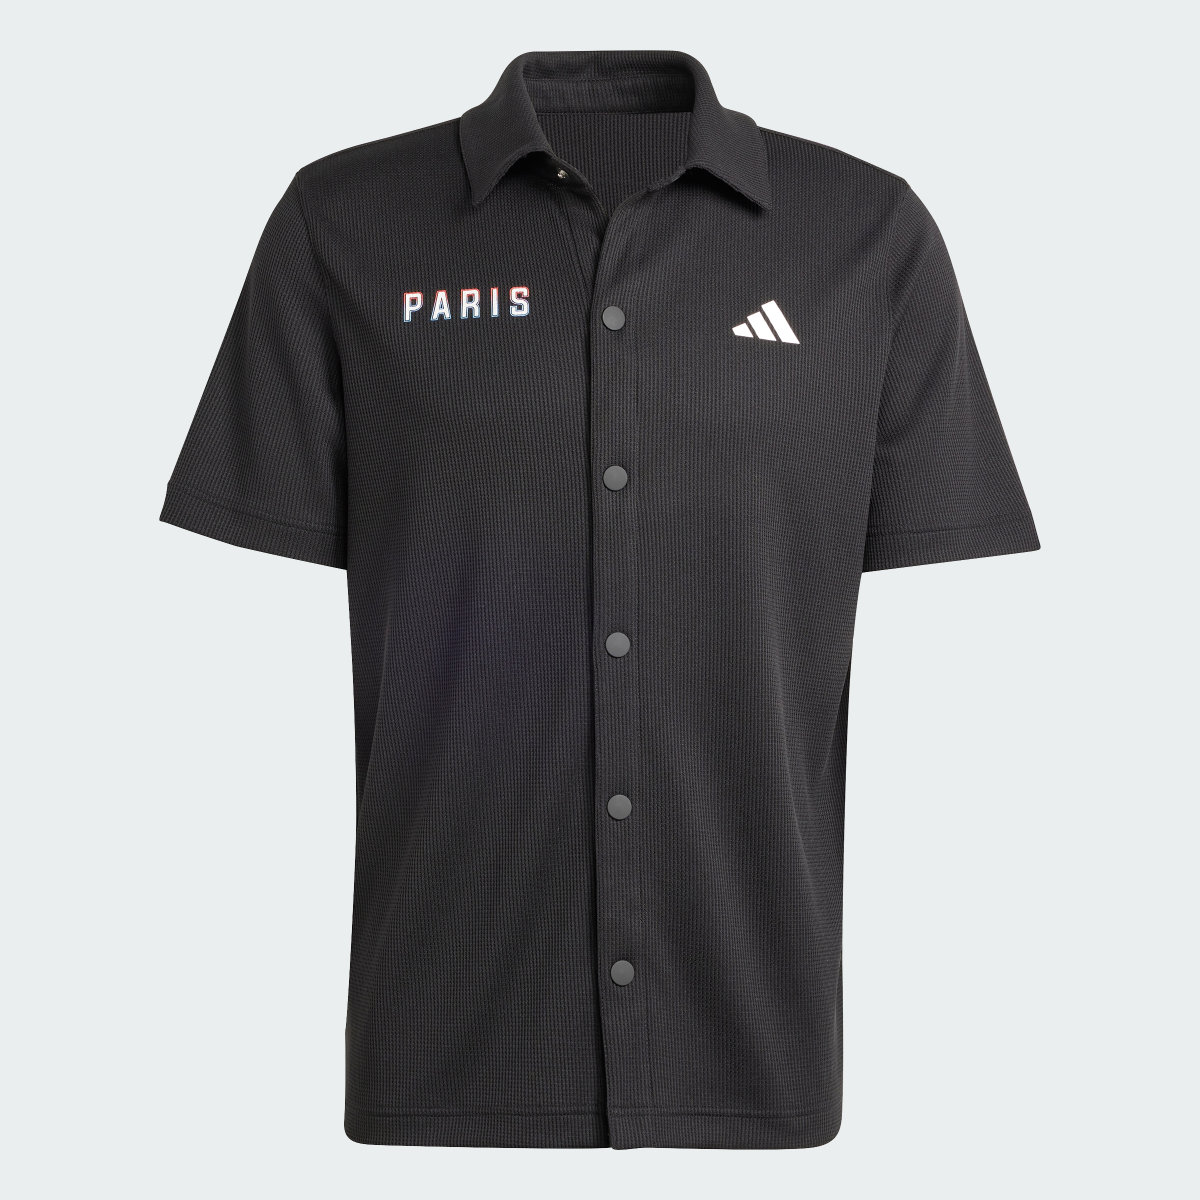 Adidas Paris Basketball Warm-Up Shooter AEROREADY Shirt. 5